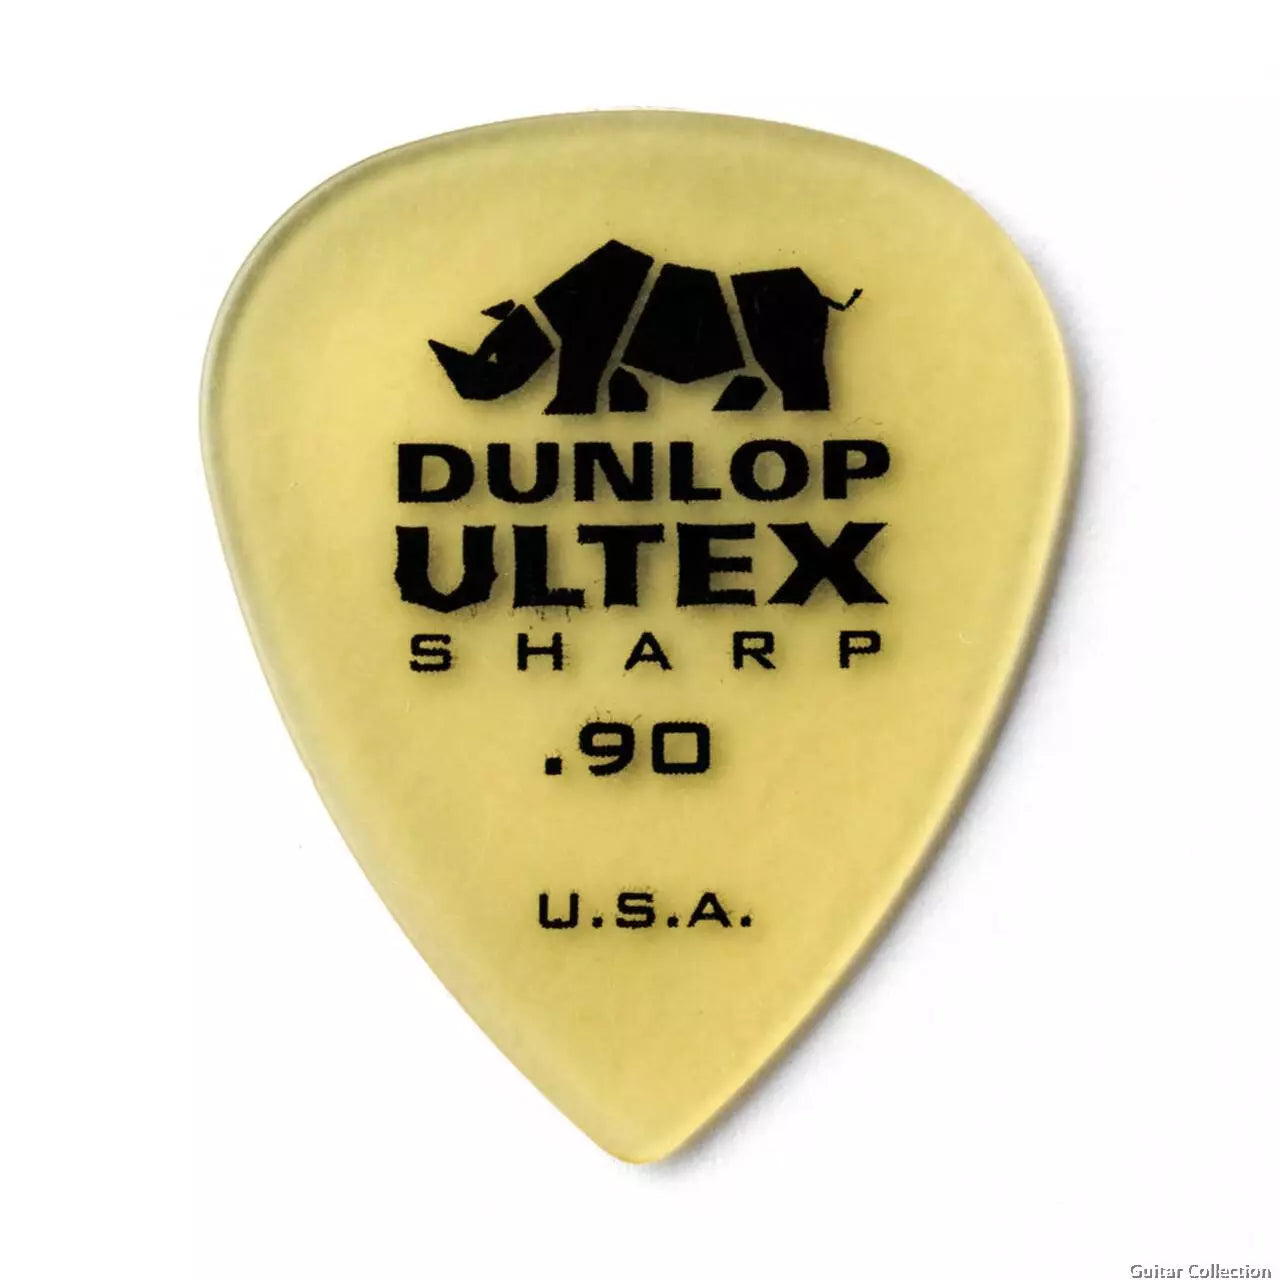 Jim Dunlop 433P.90 Ultex Sharp Guitar Picks 0.90MM (6 PCS / PACK ) - Reco Music Malaysia